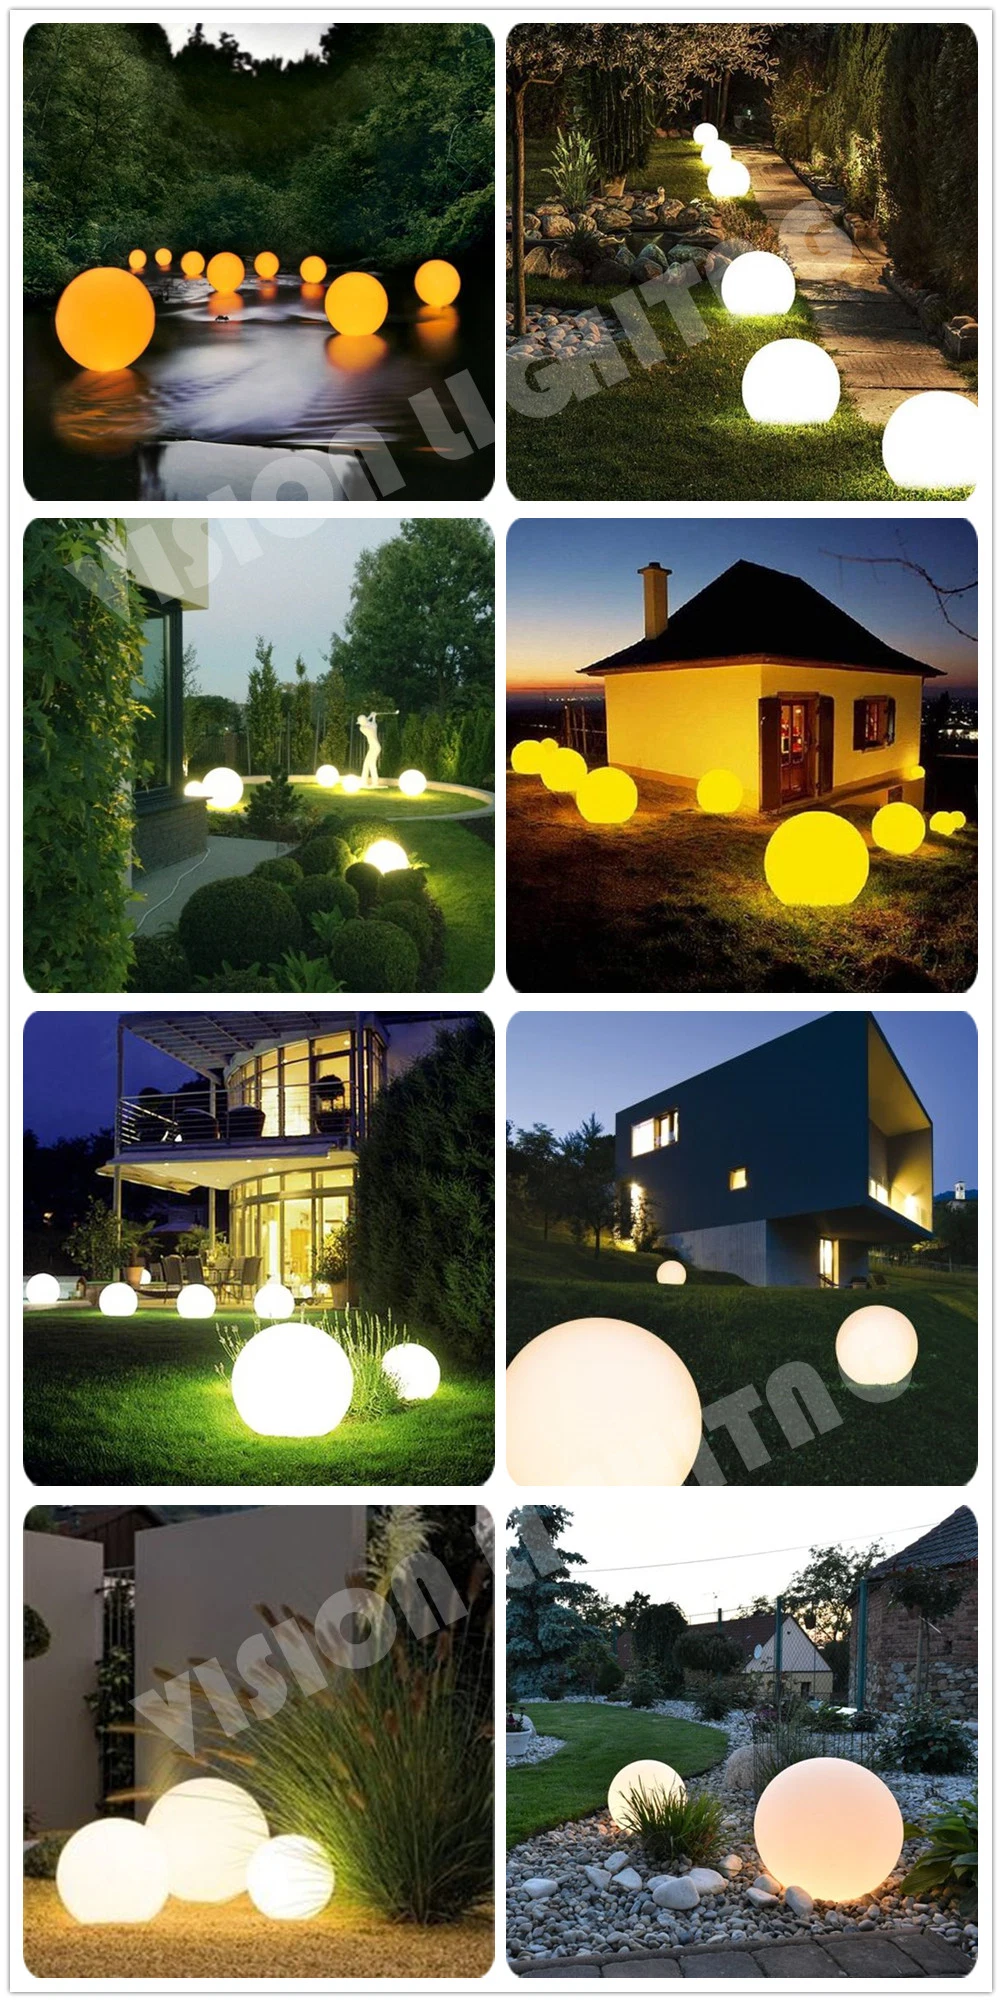 Remote Control Outdoor Garden Pool Decoration Ball Light